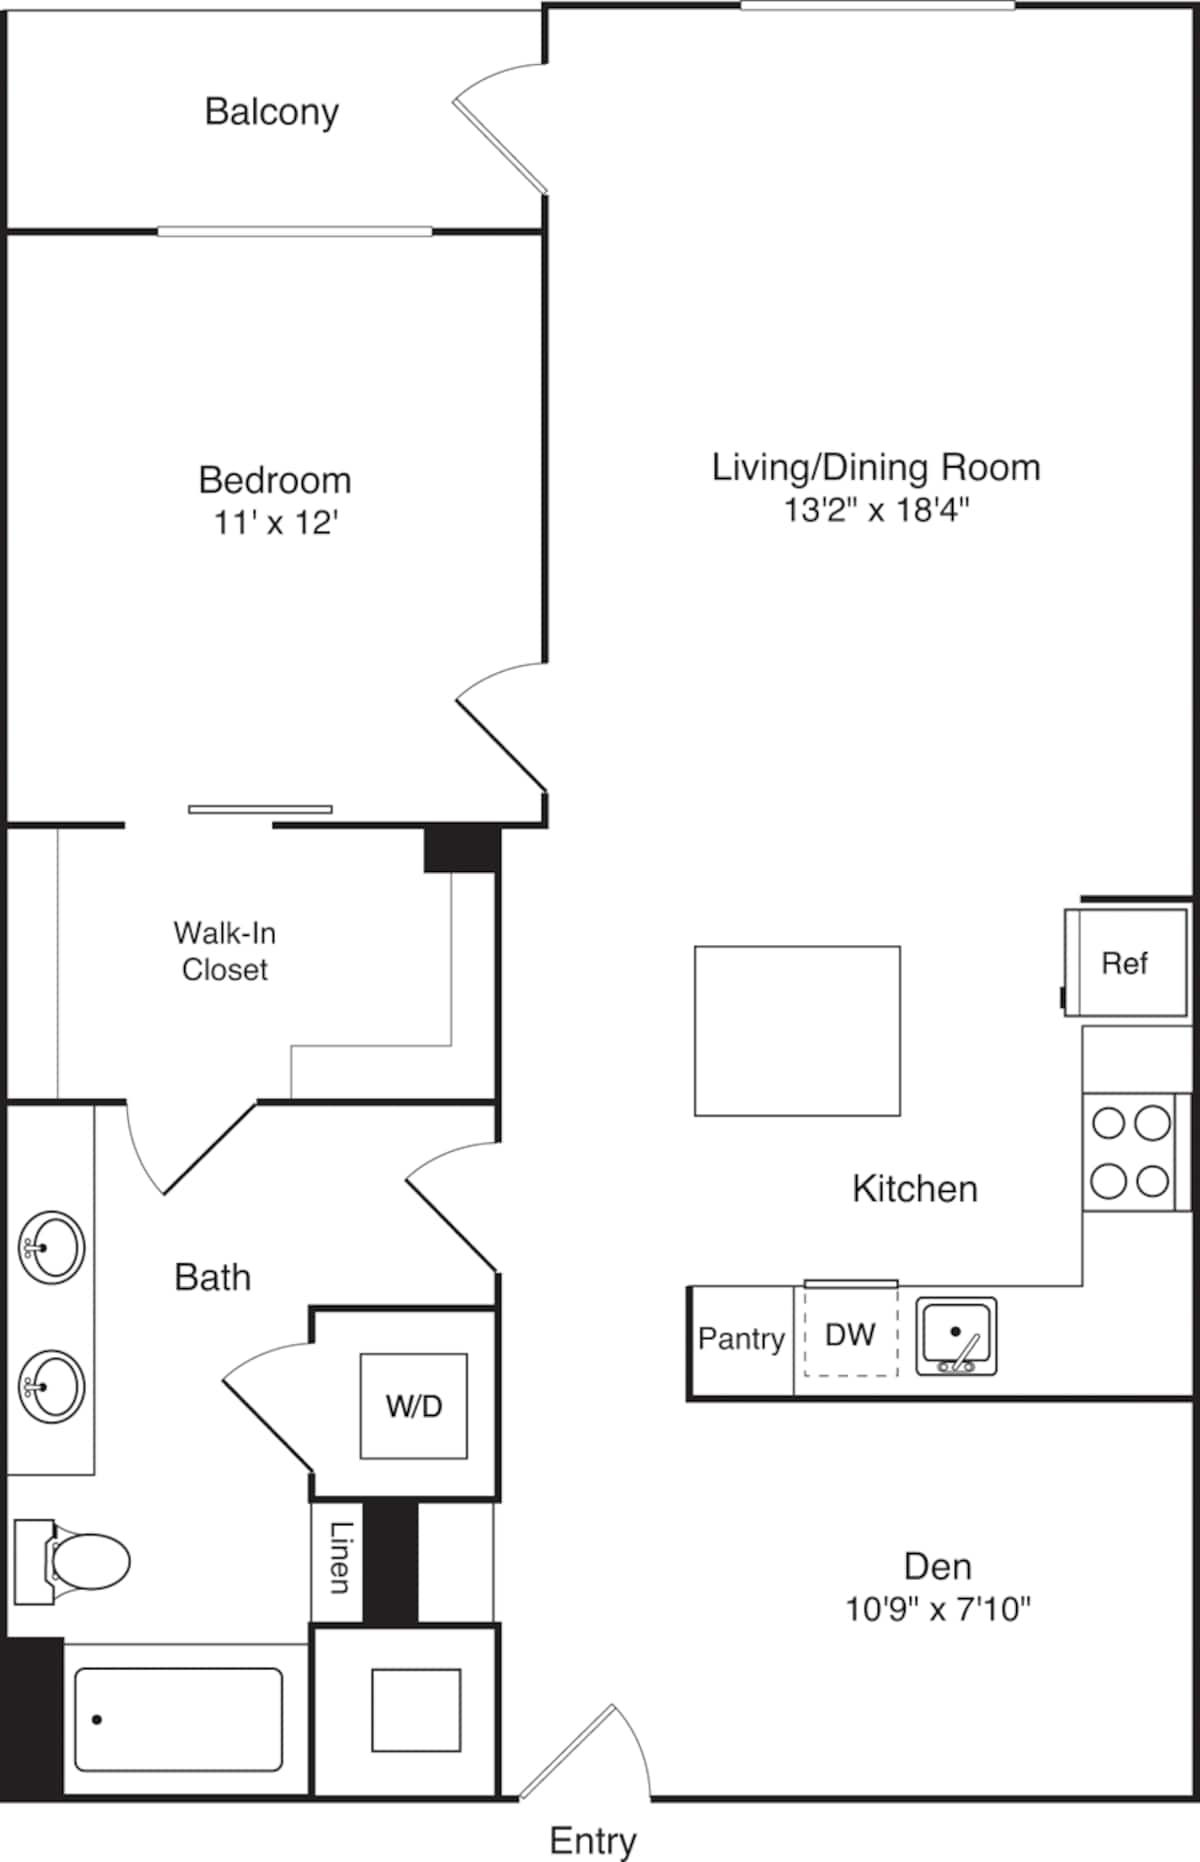 Floorplan diagram for A22, showing 1 bedroom